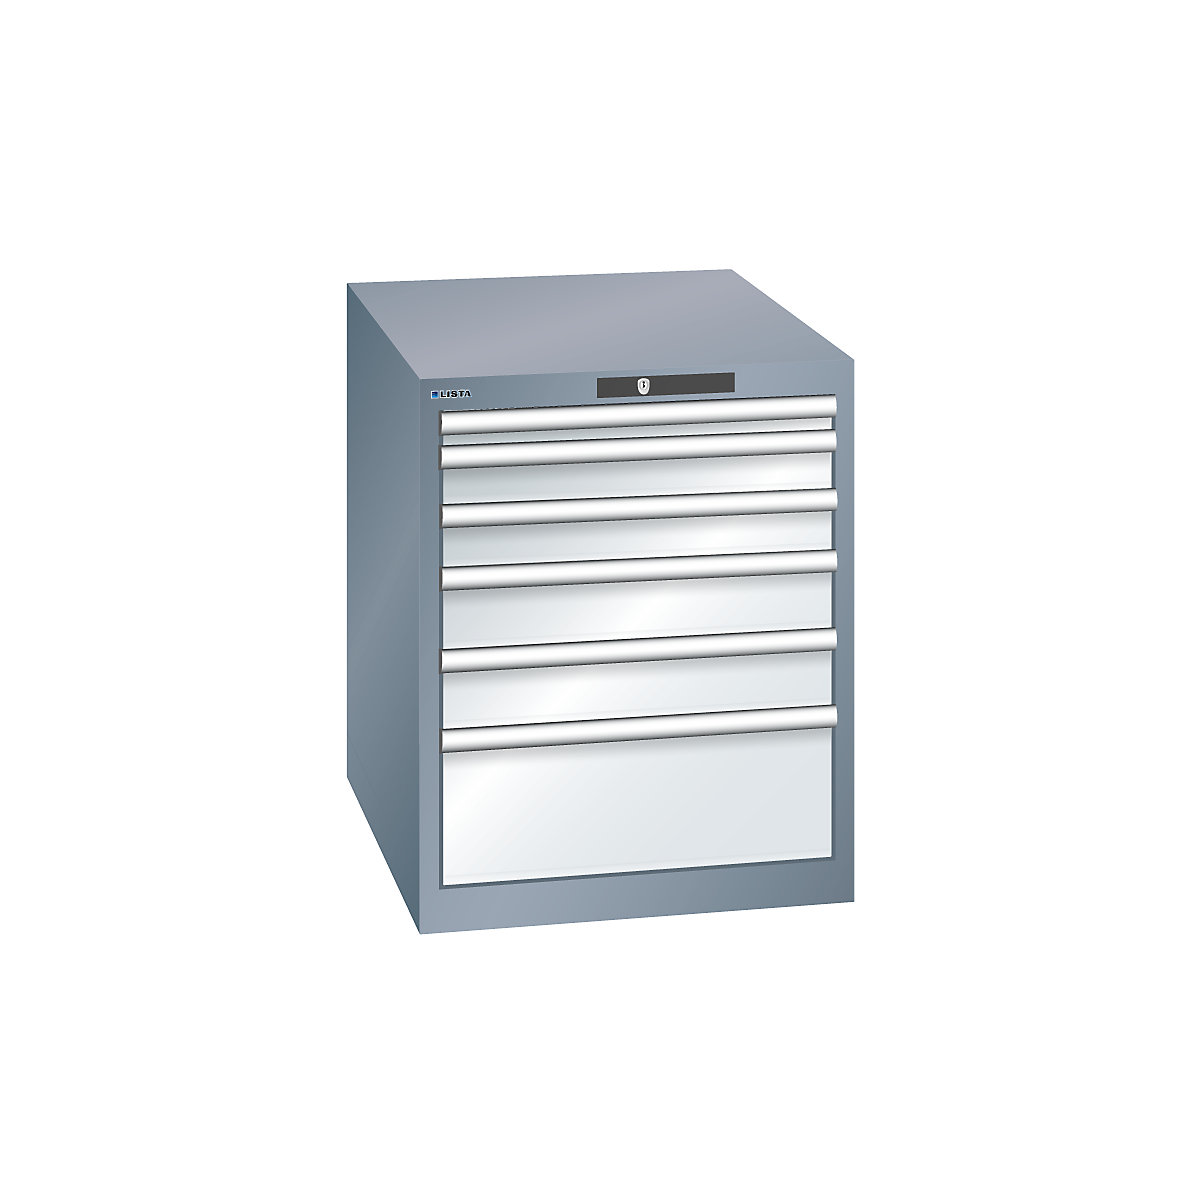 Armoire à tiroirs avec 6 tiroirs – LISTA, l x p x h 564 x 724 x 700 mm, gris métallisé / gris clair-3